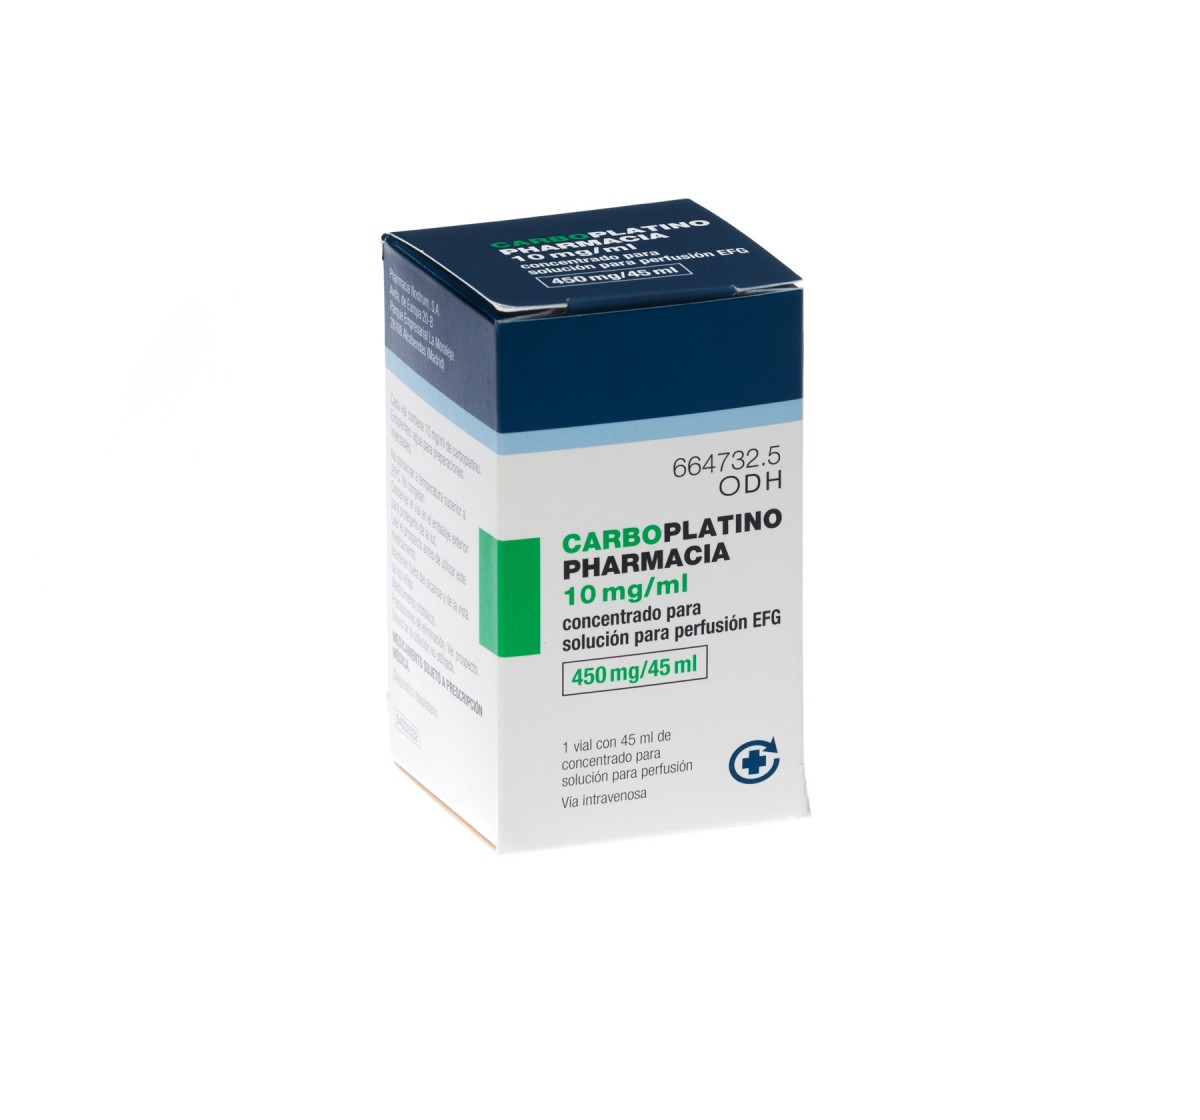 CARBOPLATINO PHARMACIA 10 mg/ml CONCENTRADO PARA SOLUCION PARA PERFUSION EFG, 1 vial de 45 ml fotografía del envase.